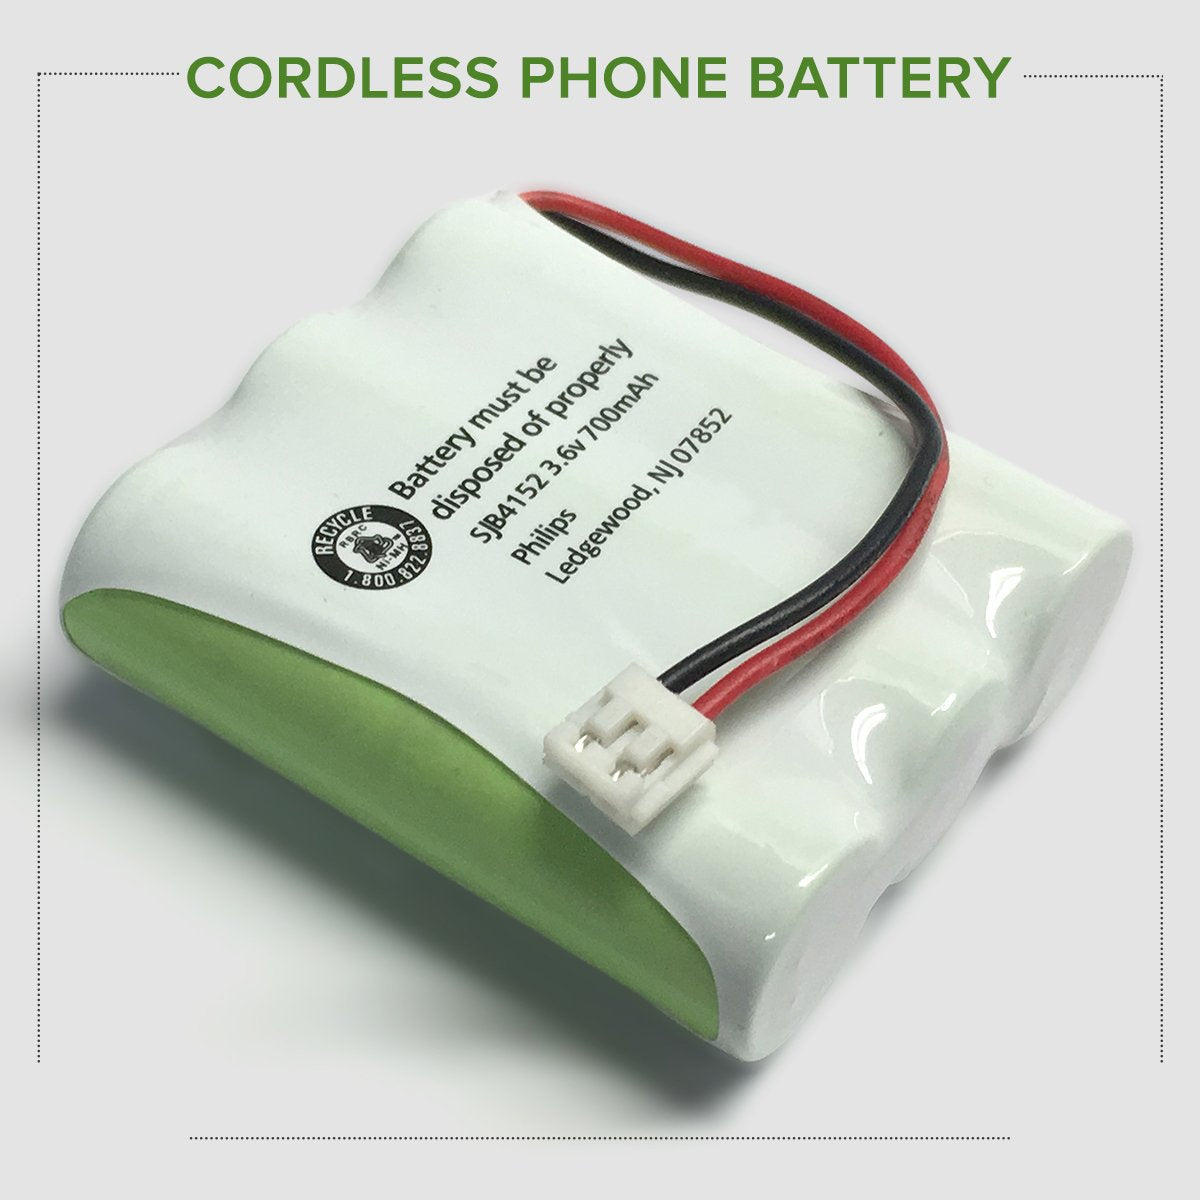 AT&T  E2127 Cordless Phone Battery